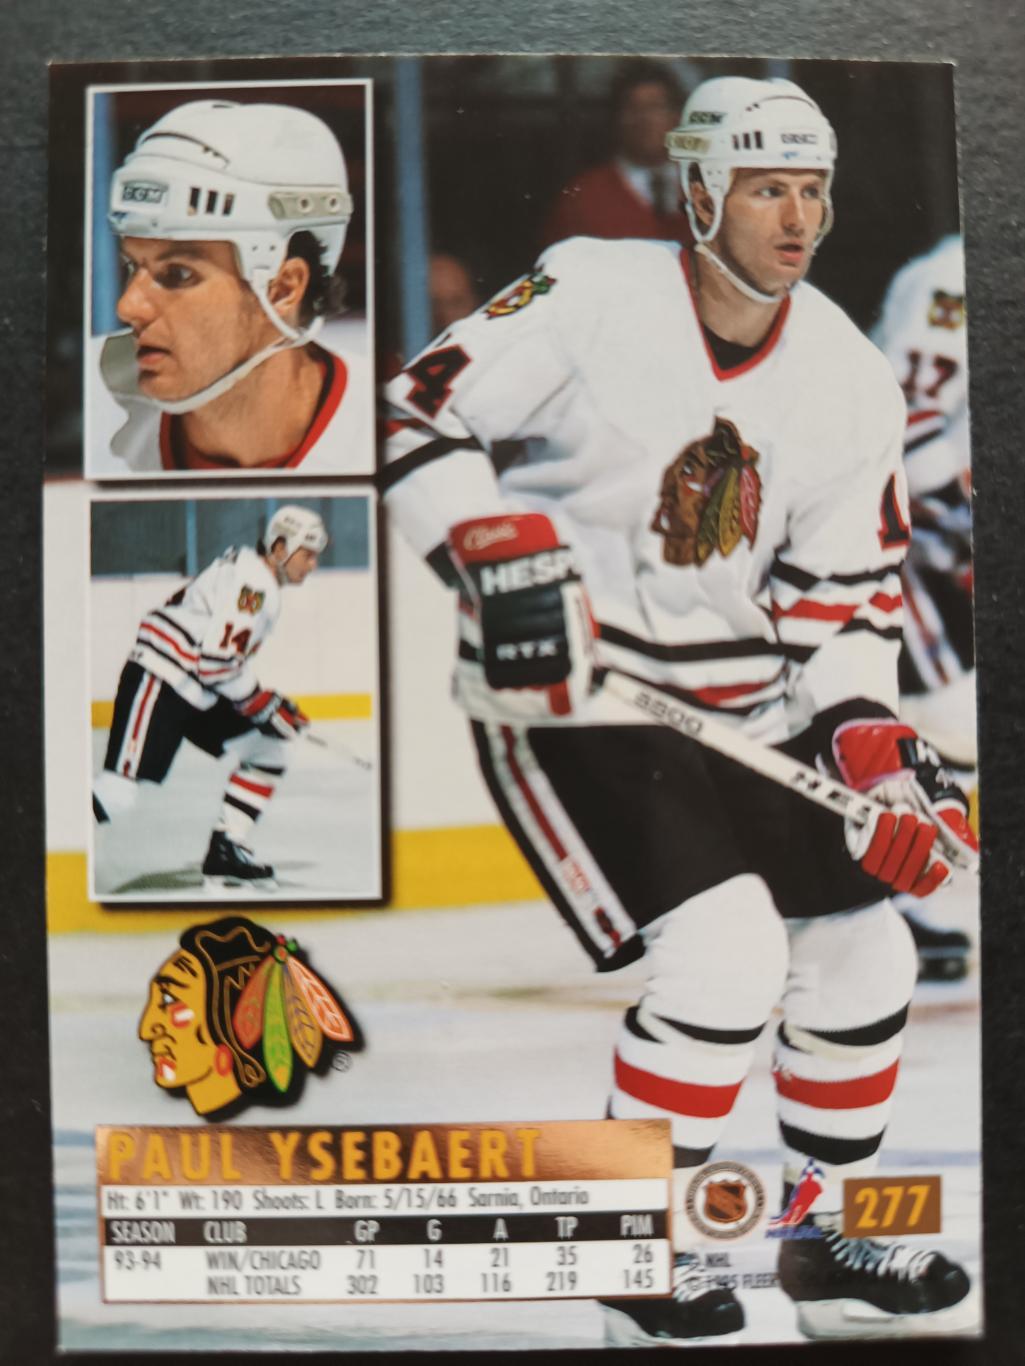 ХОККЕЙ КАРТОЧКА НХЛ FLEER ULTRA 1994-95 NHL PAUL YASEBAERT BLACK HAWKS #277 3